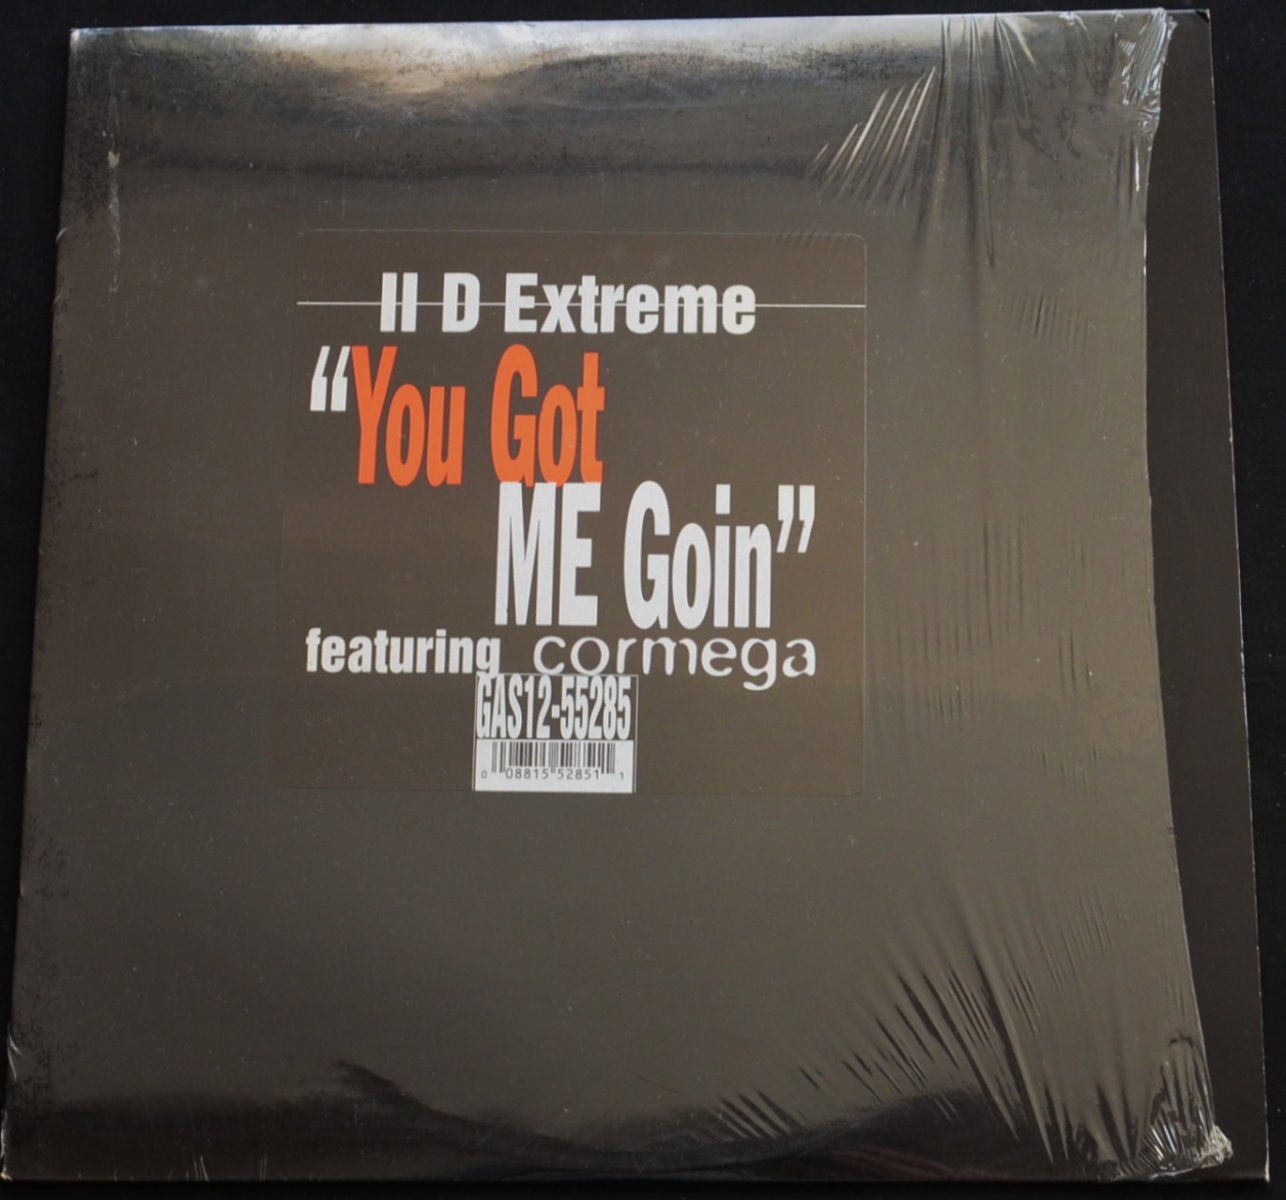 II D EXTREME (FEAT CORMEGA) / YOU GOT ME GOIN' (PROD BY RODNEY JERKINS) (12